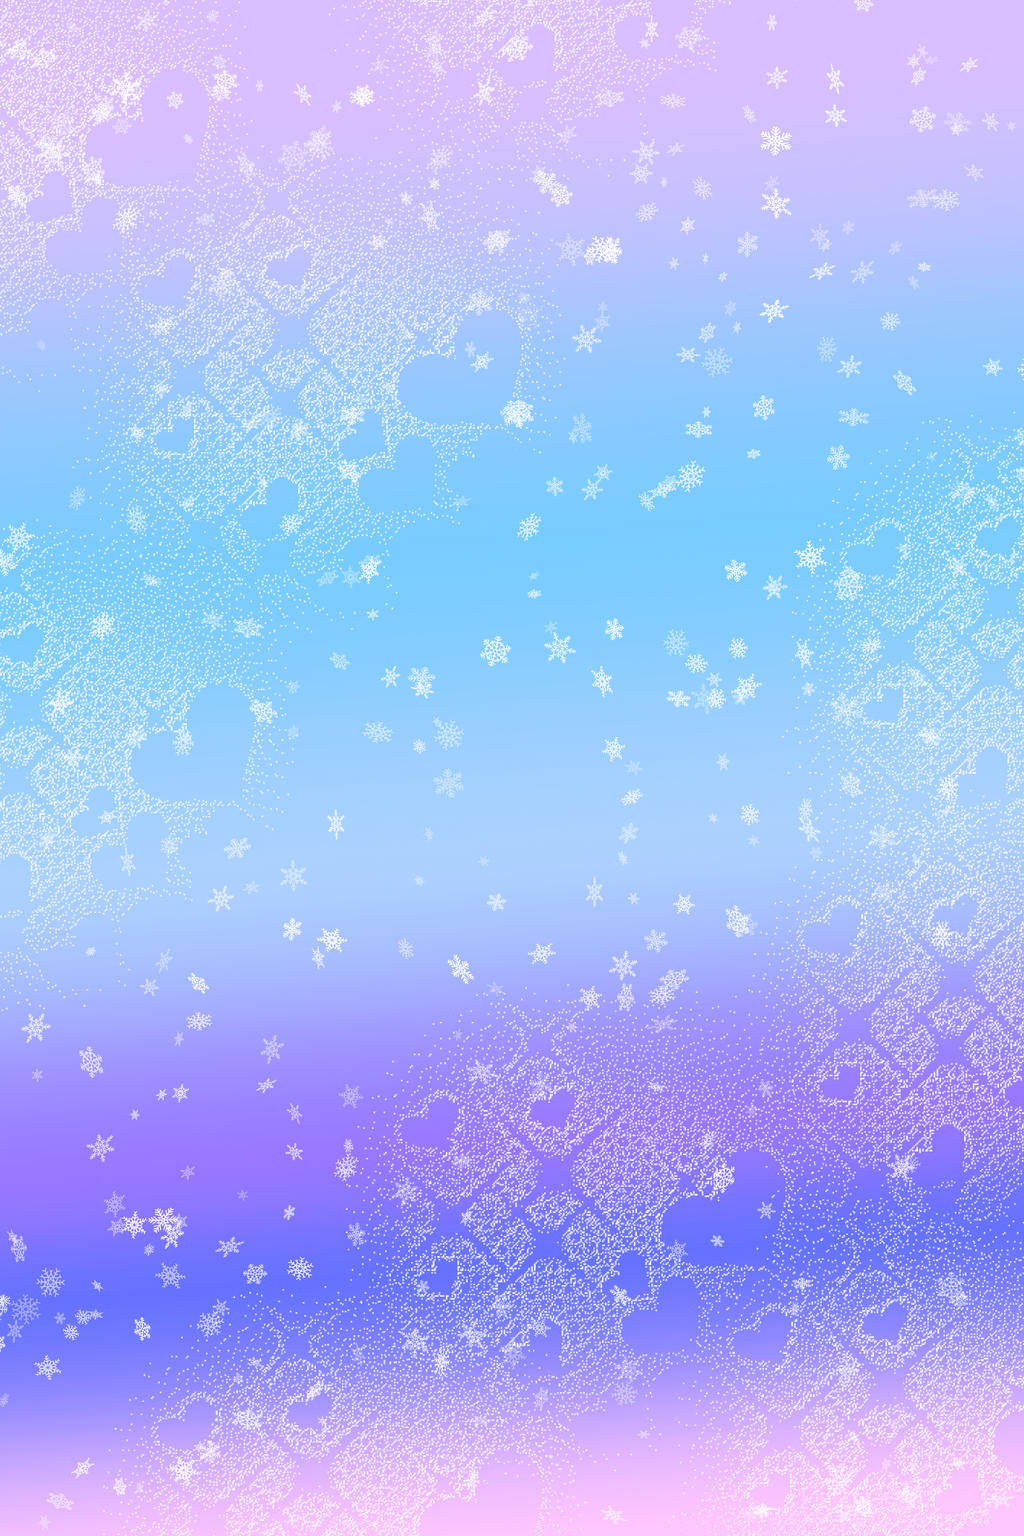 Pastel Snowy Love Background by Yuni-Naoki on DeviantArt